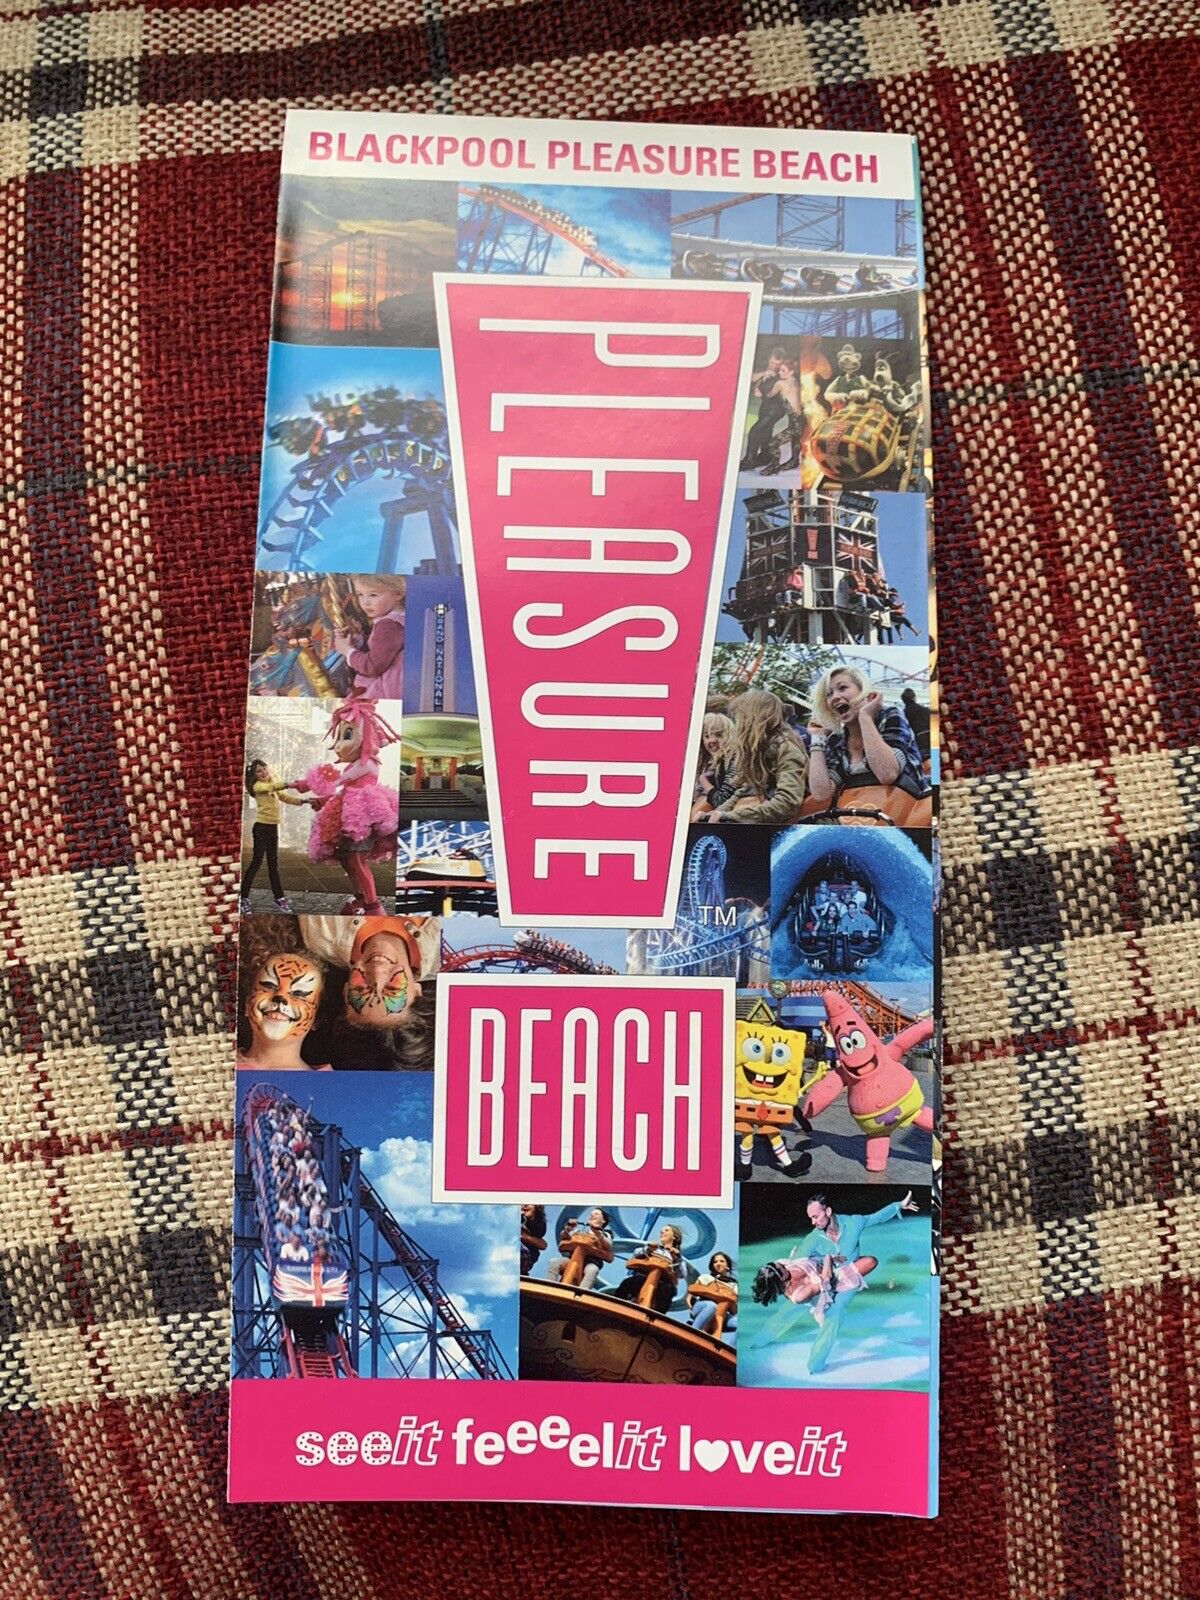 BLACKPOOL PLEASURE BEACH ADVERTISING BROCHURE 2014 roller coaster amusement